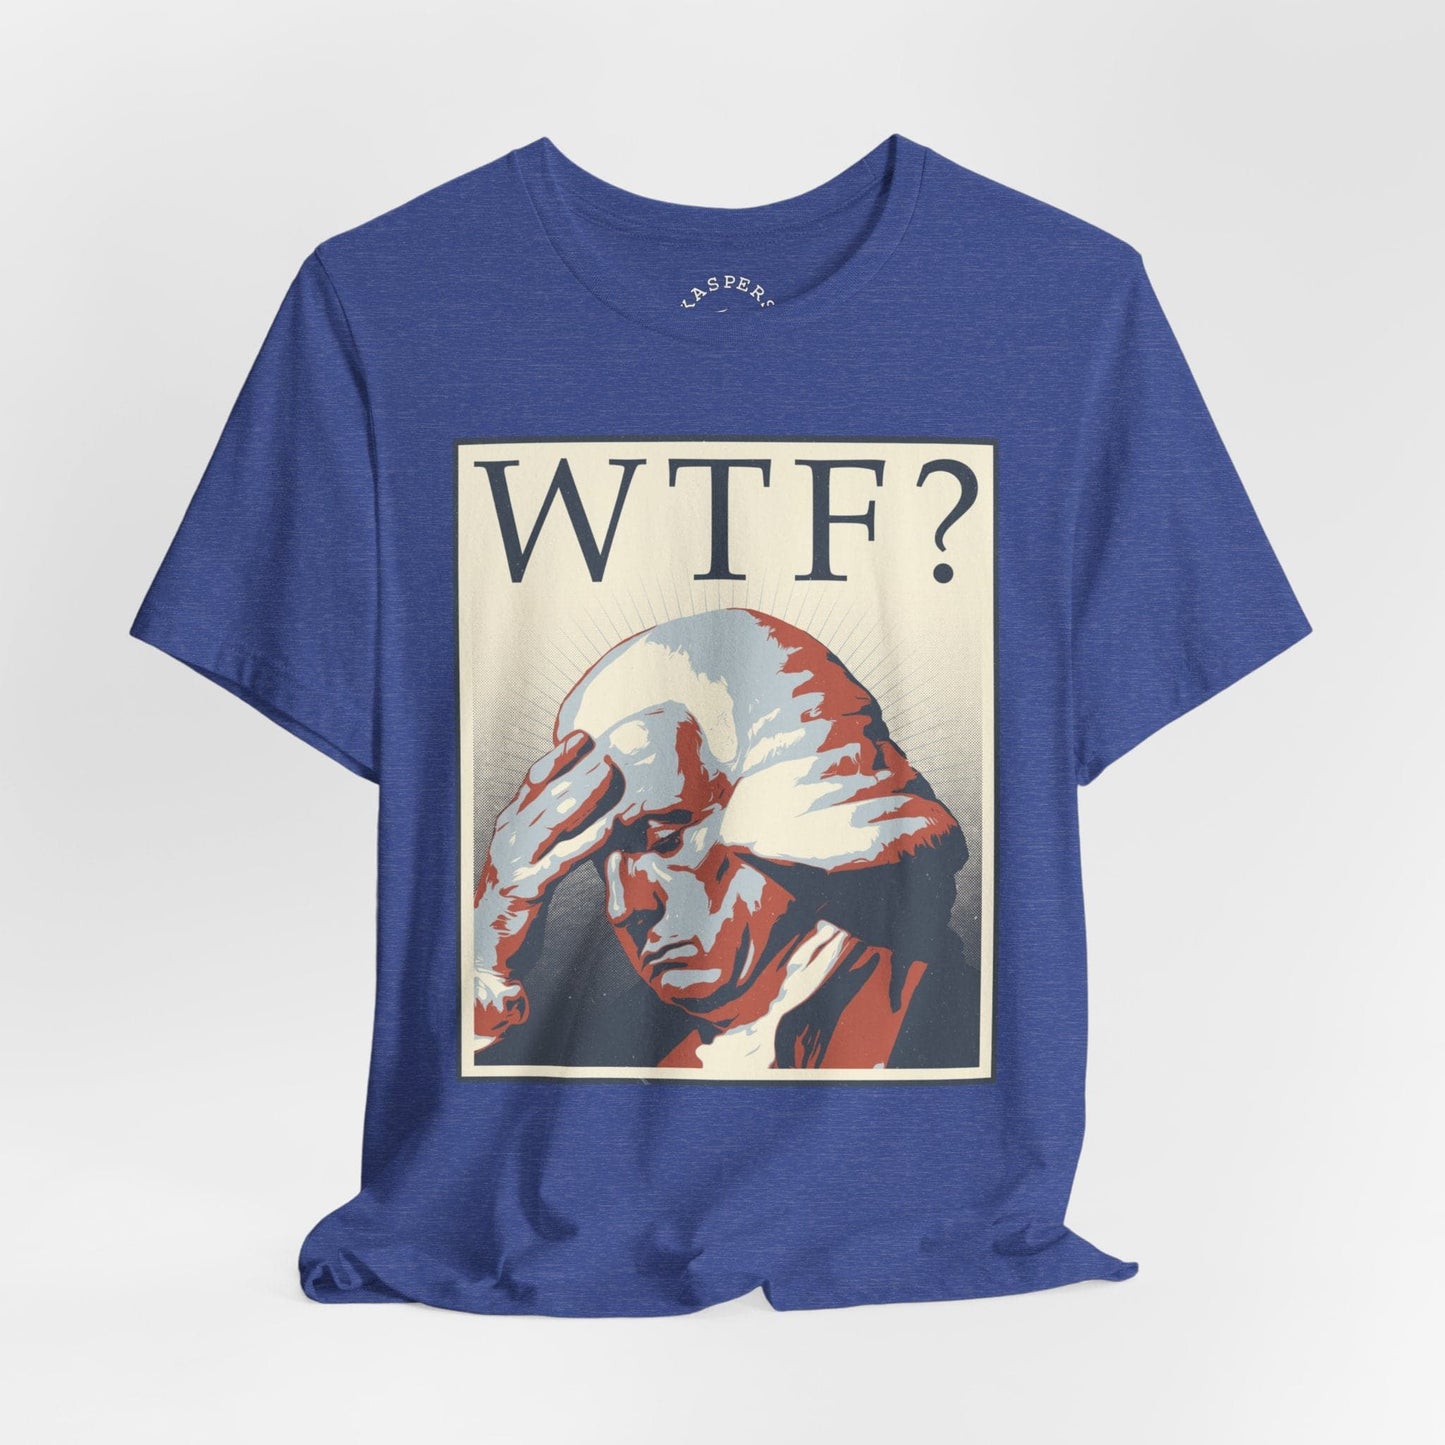 WTF? -George Washington T-Shirt